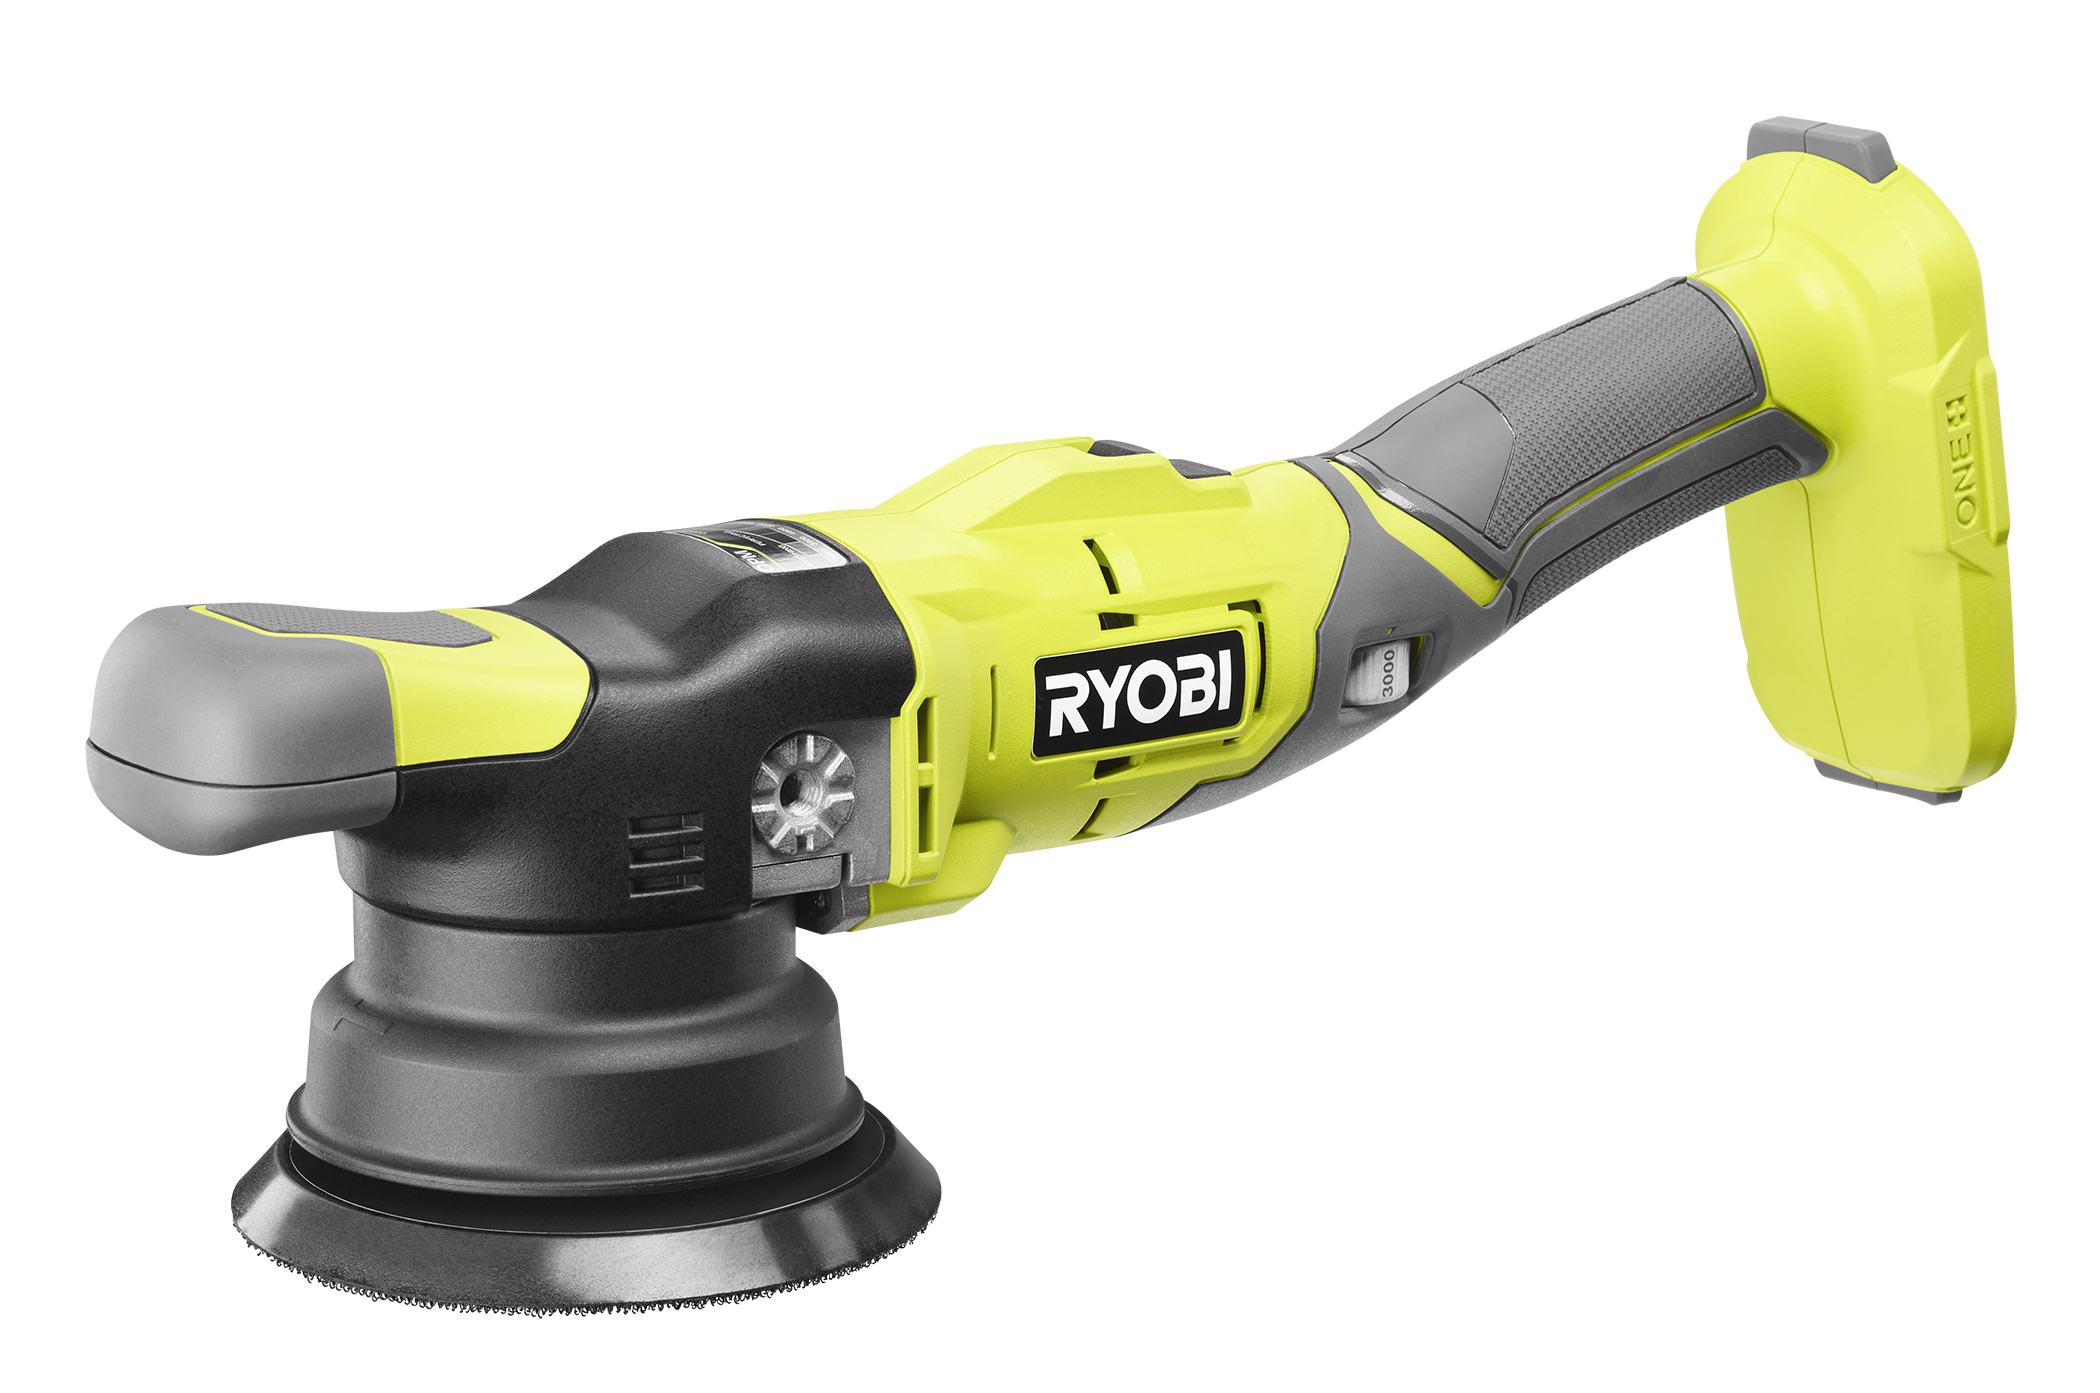 Ryobi Upgraded their 18V Cordless Buffer/Polisher